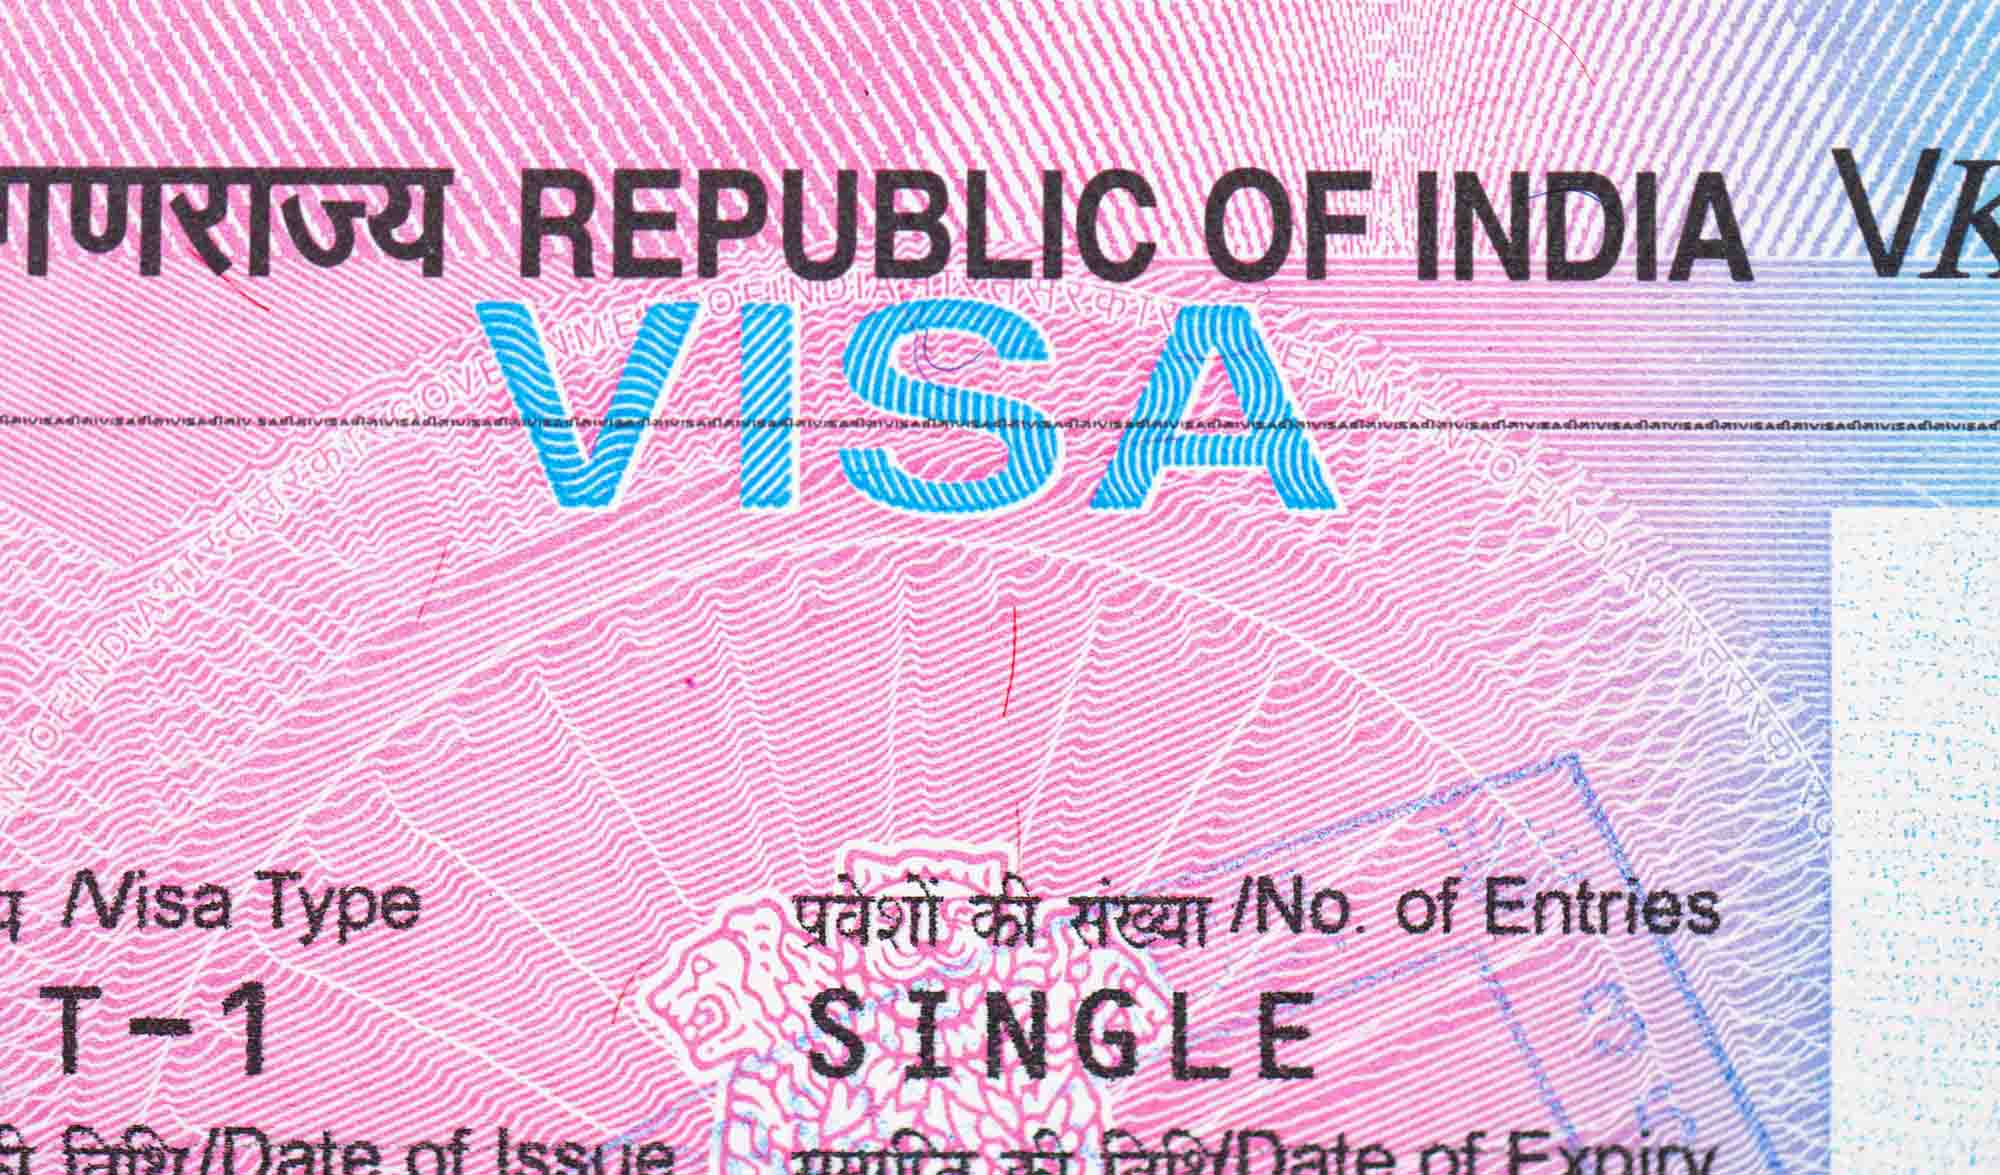 india tourist visa for pakistani